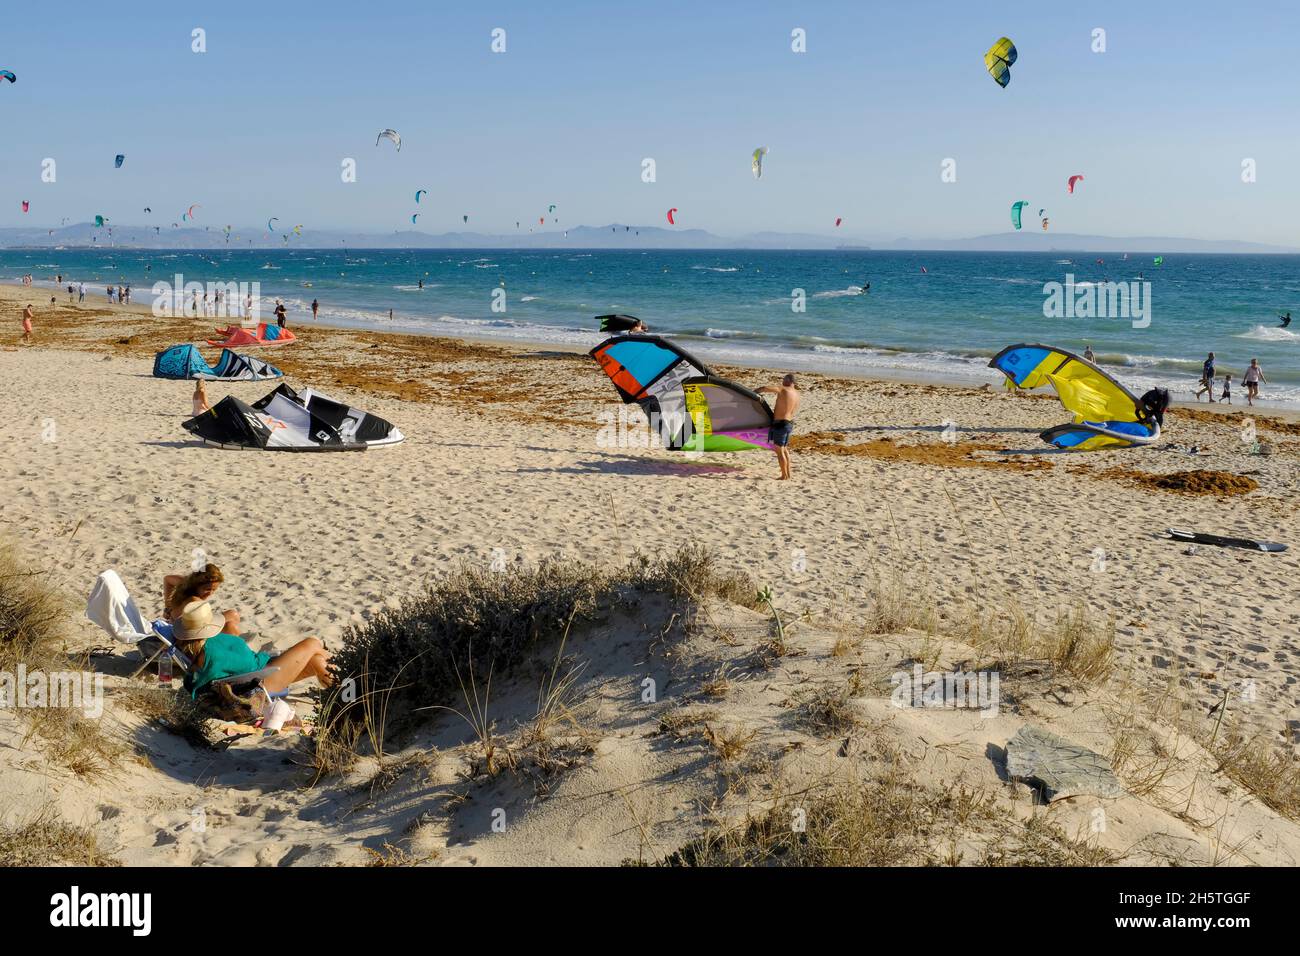 Kitesurfers preparing their kites and sun bathers on Los Lances beach.Tarifa, Costa de la Luz, Cadiz Province, Andalucia, Spain Stock Photo